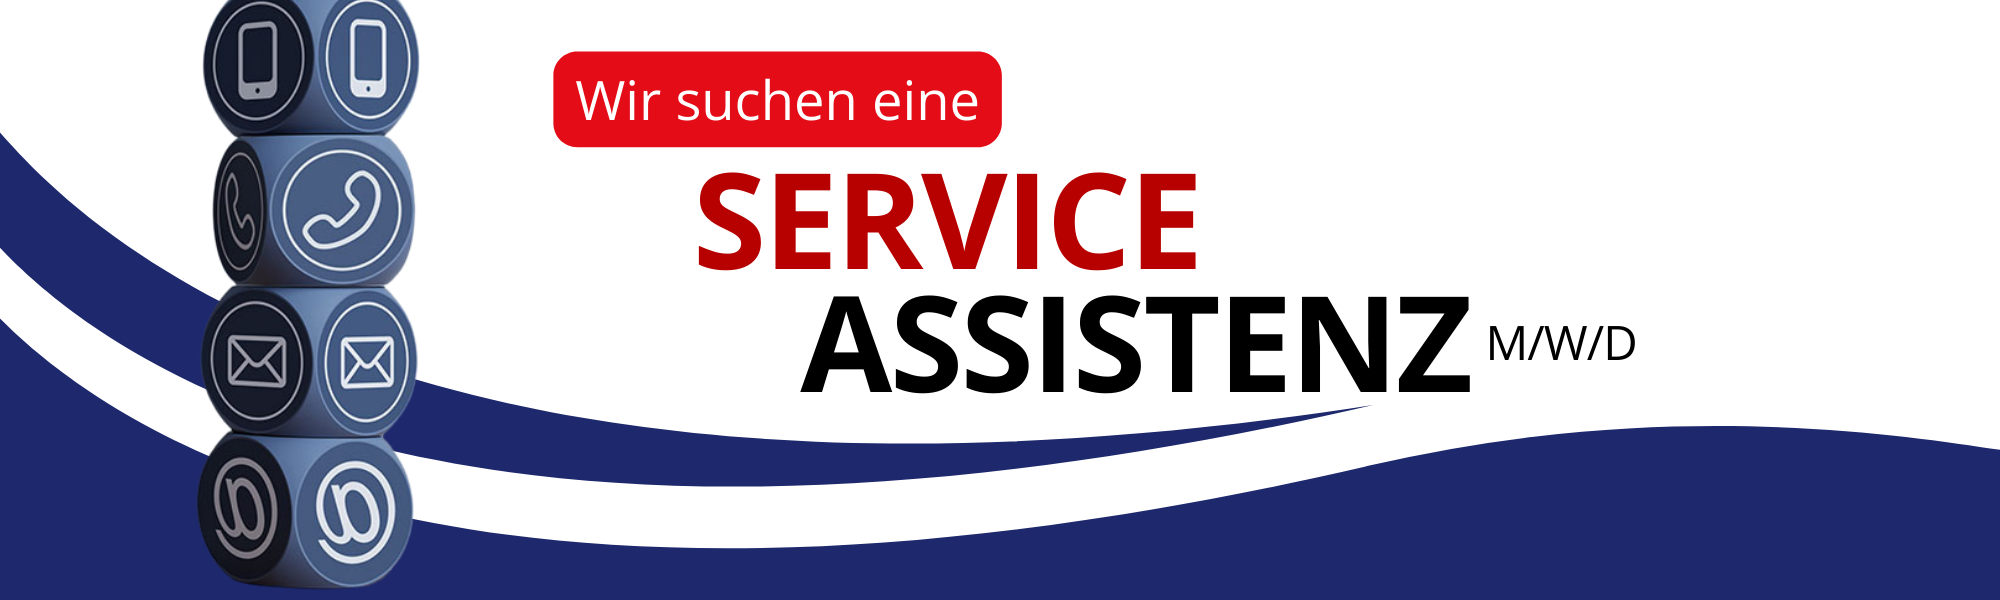 AA Service-Assistenz 01 (2000 x 600 px)